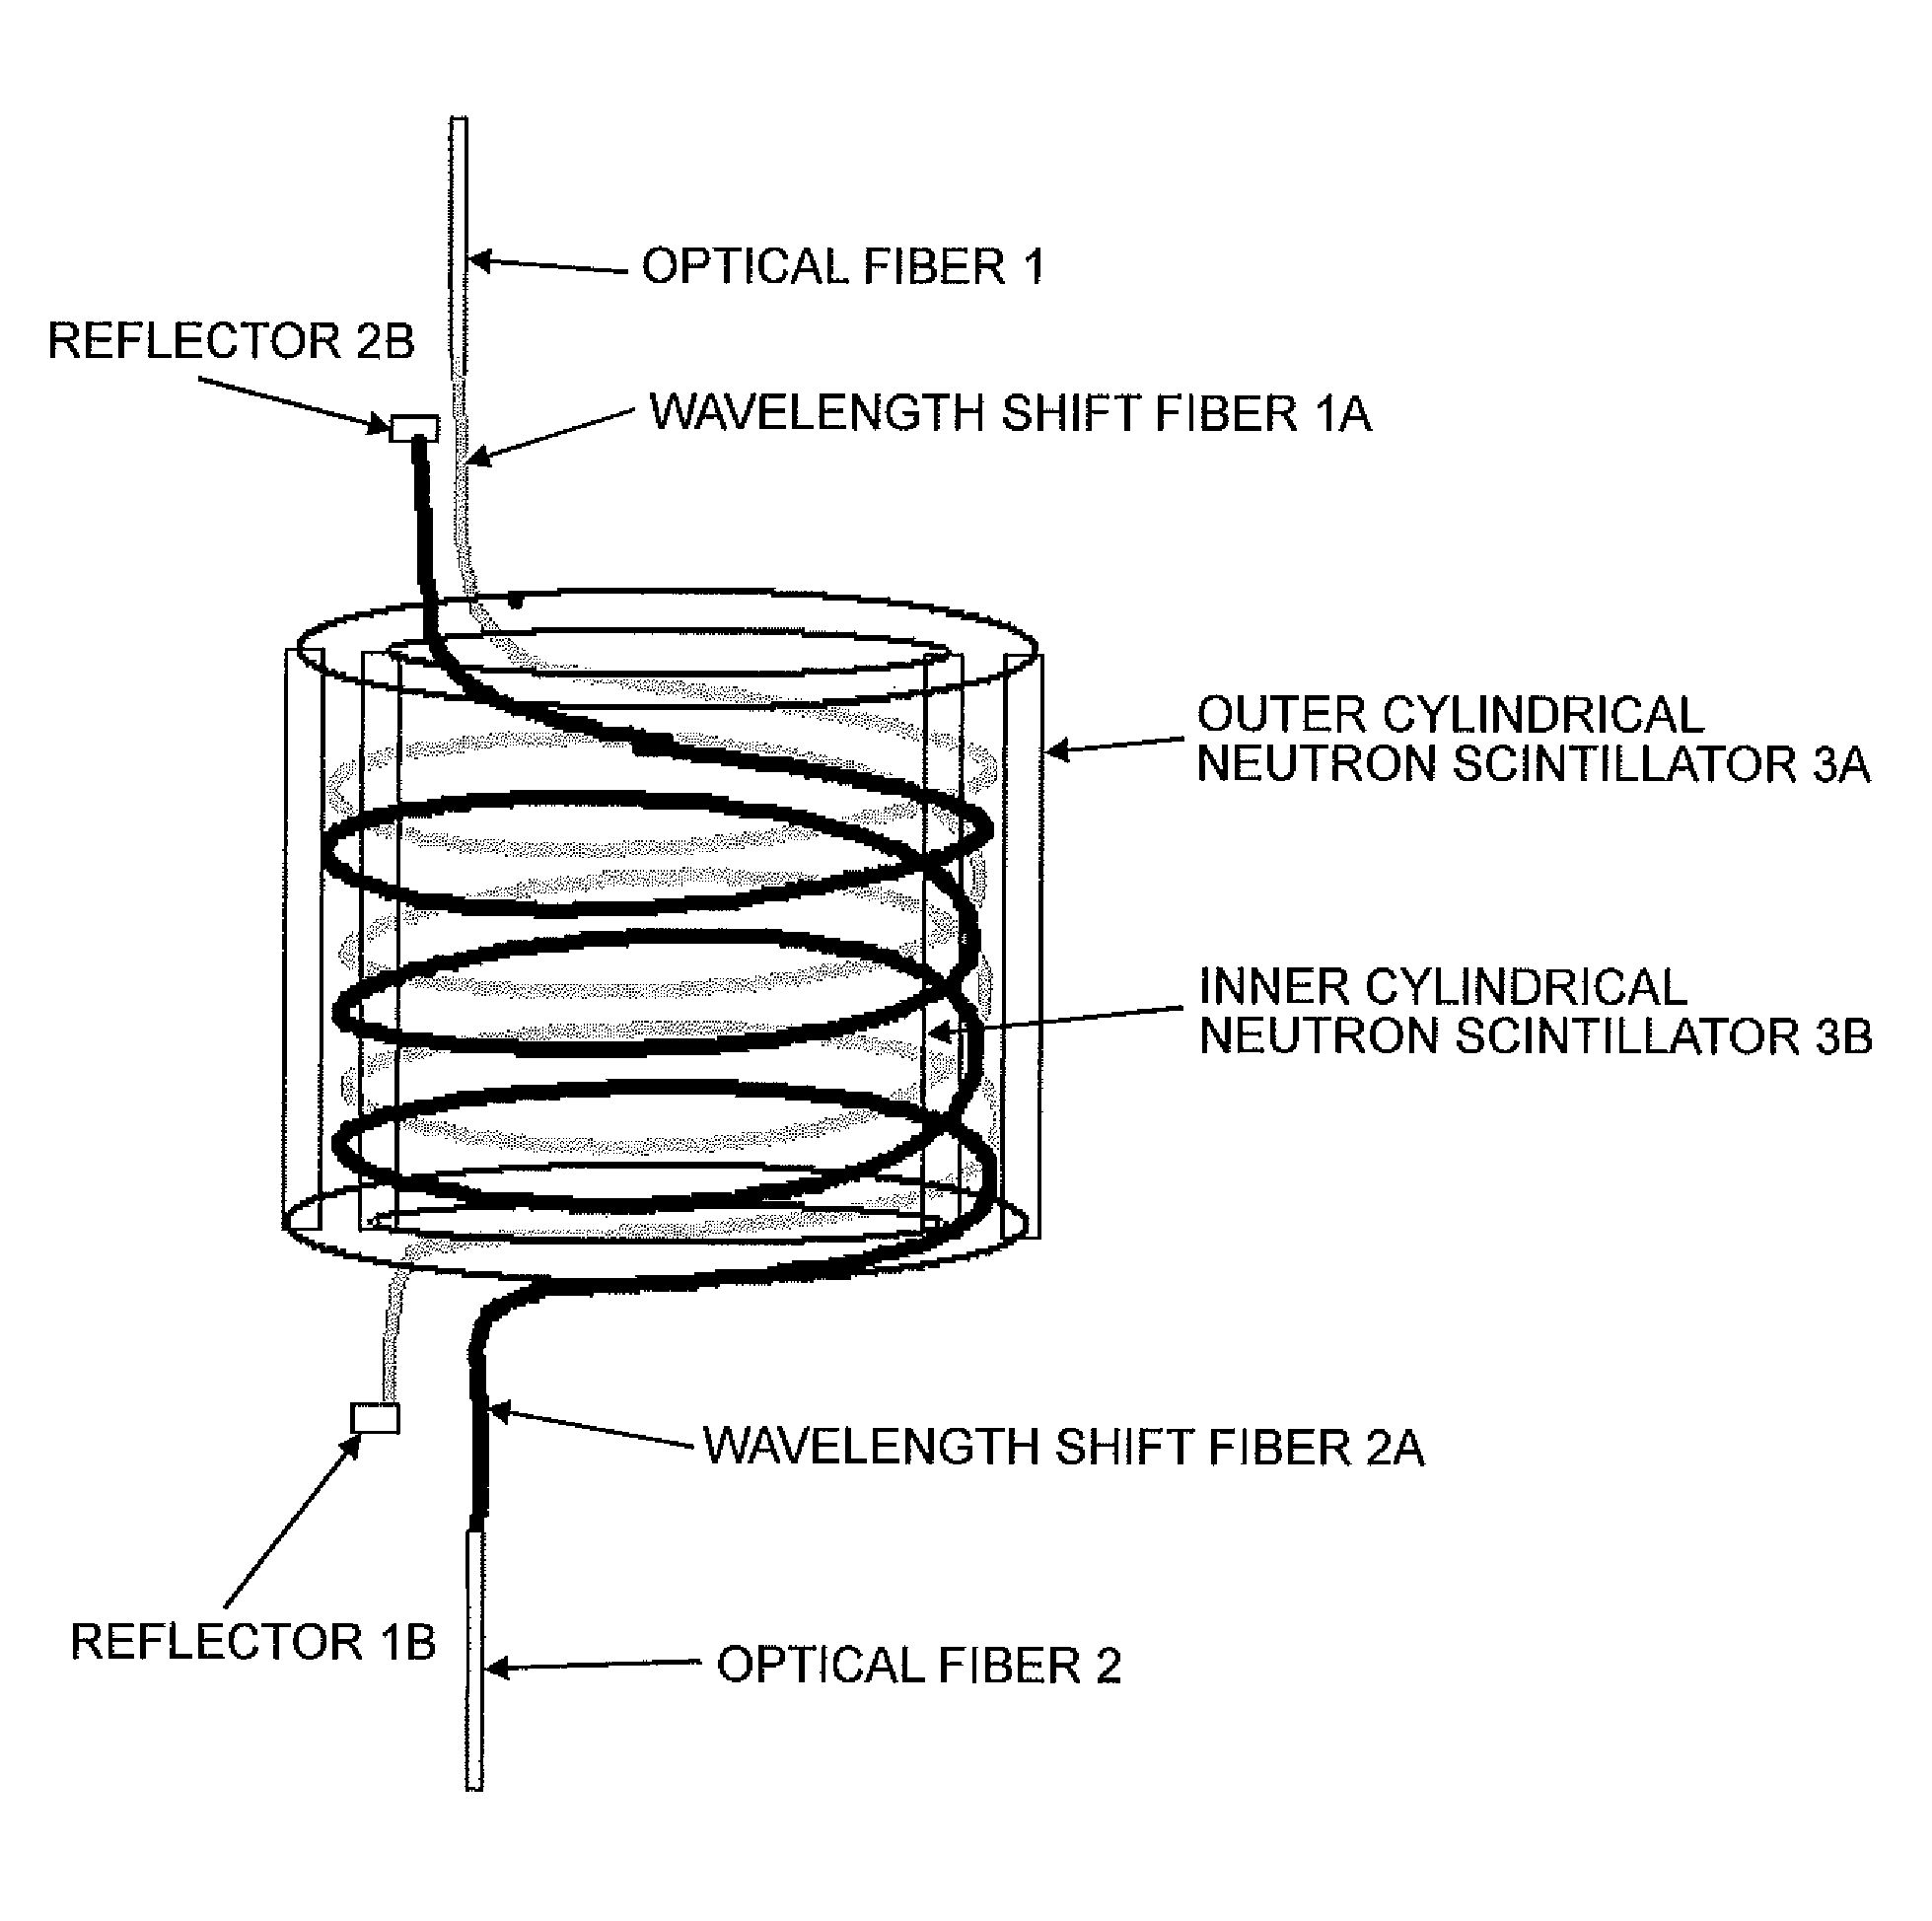 Neutron detector